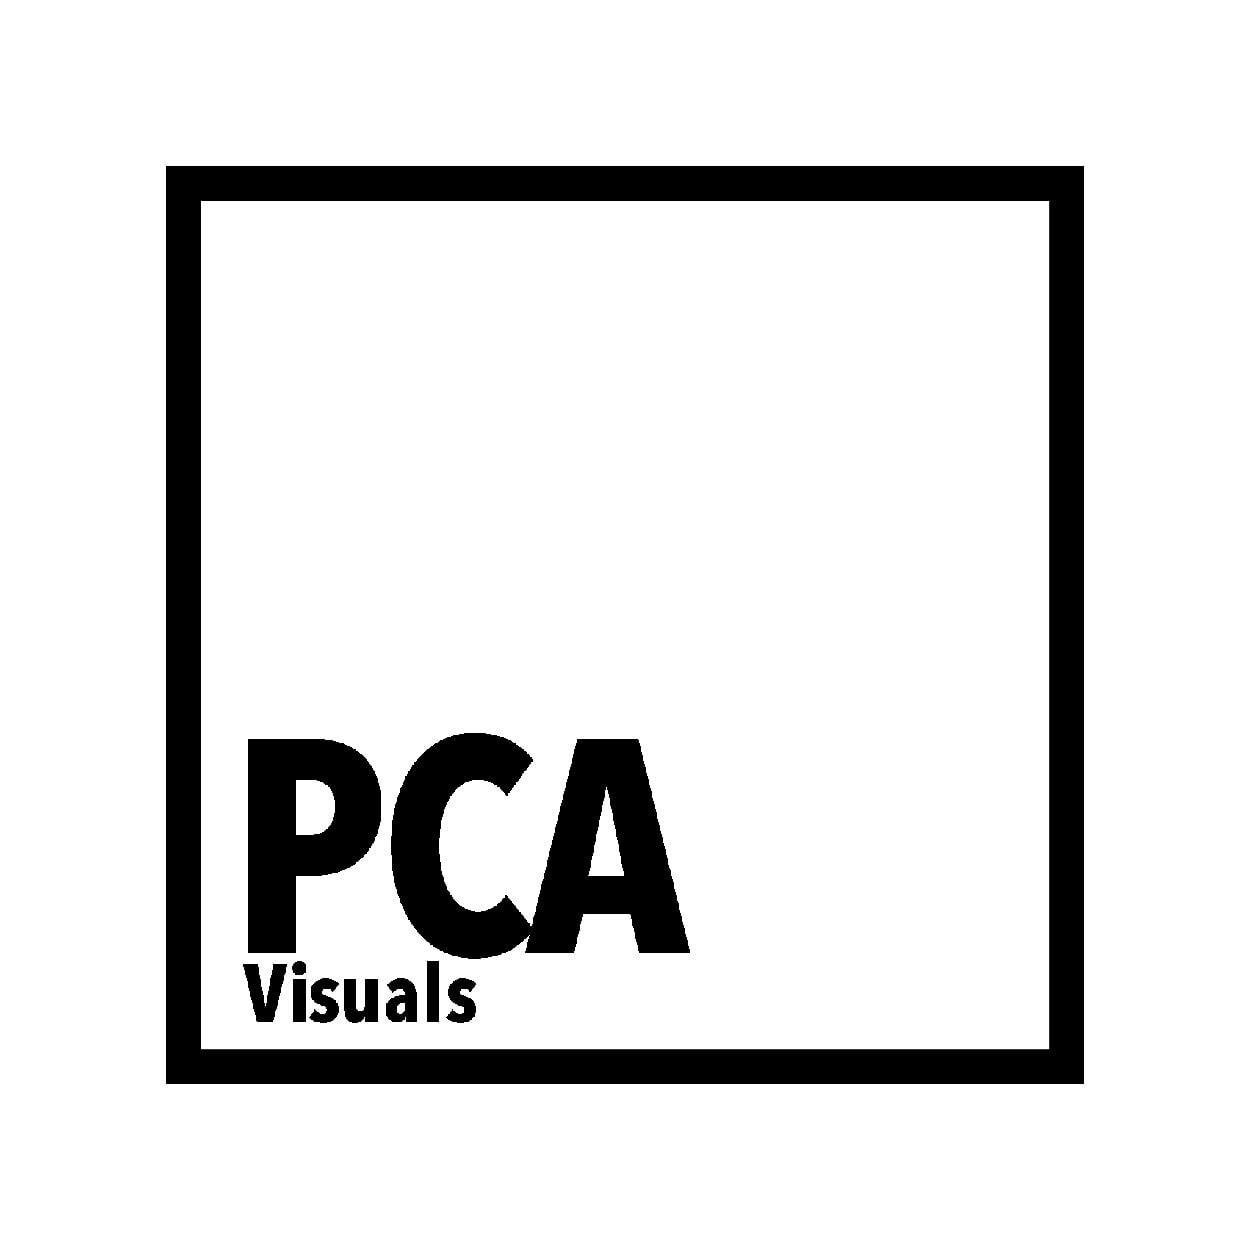 PCA Visuals